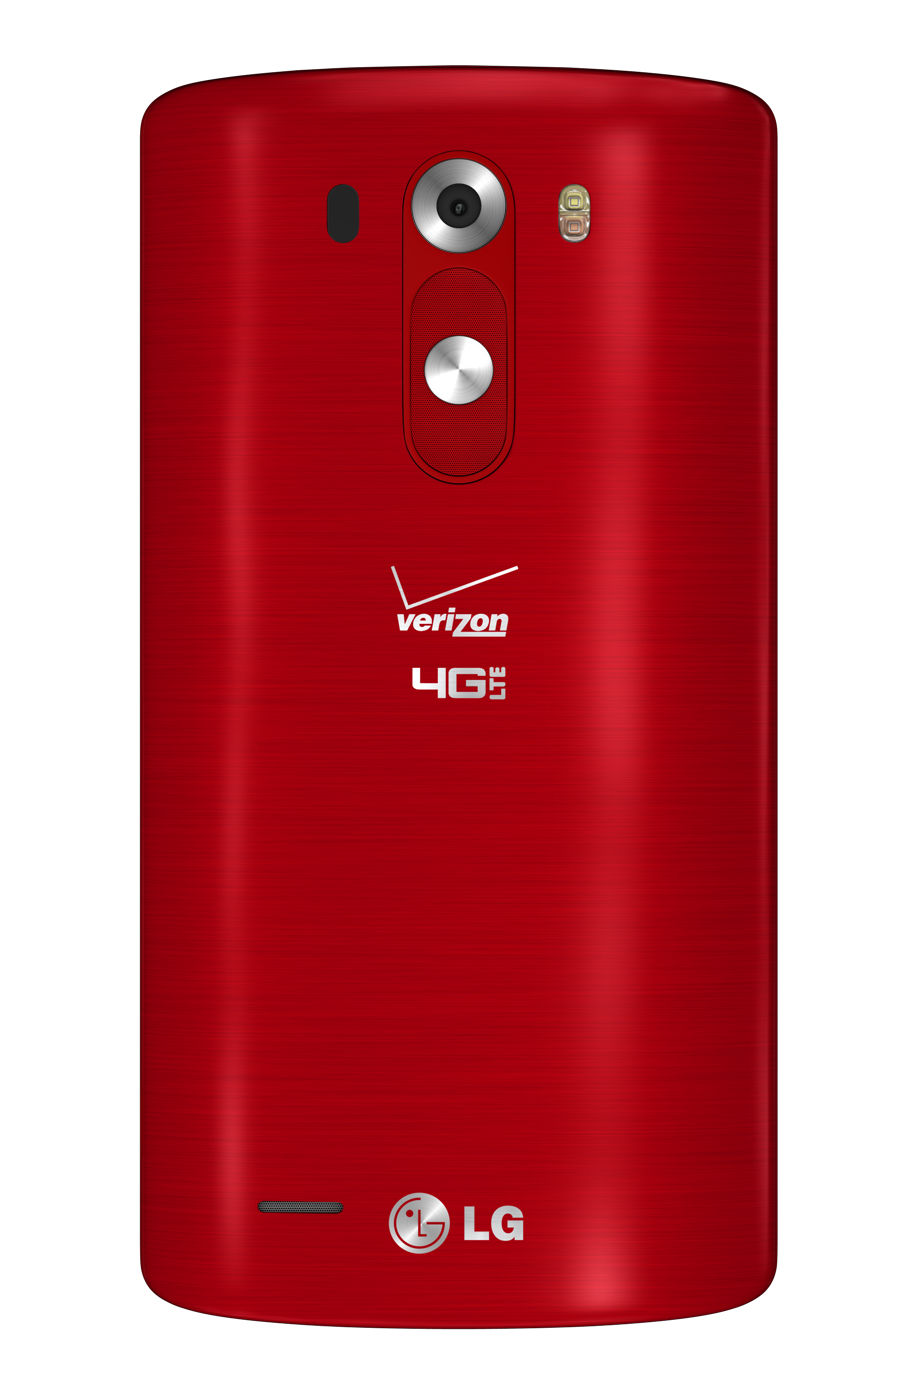 Verizon Blaze Red Lg G3 Revealed For Cyber Monday